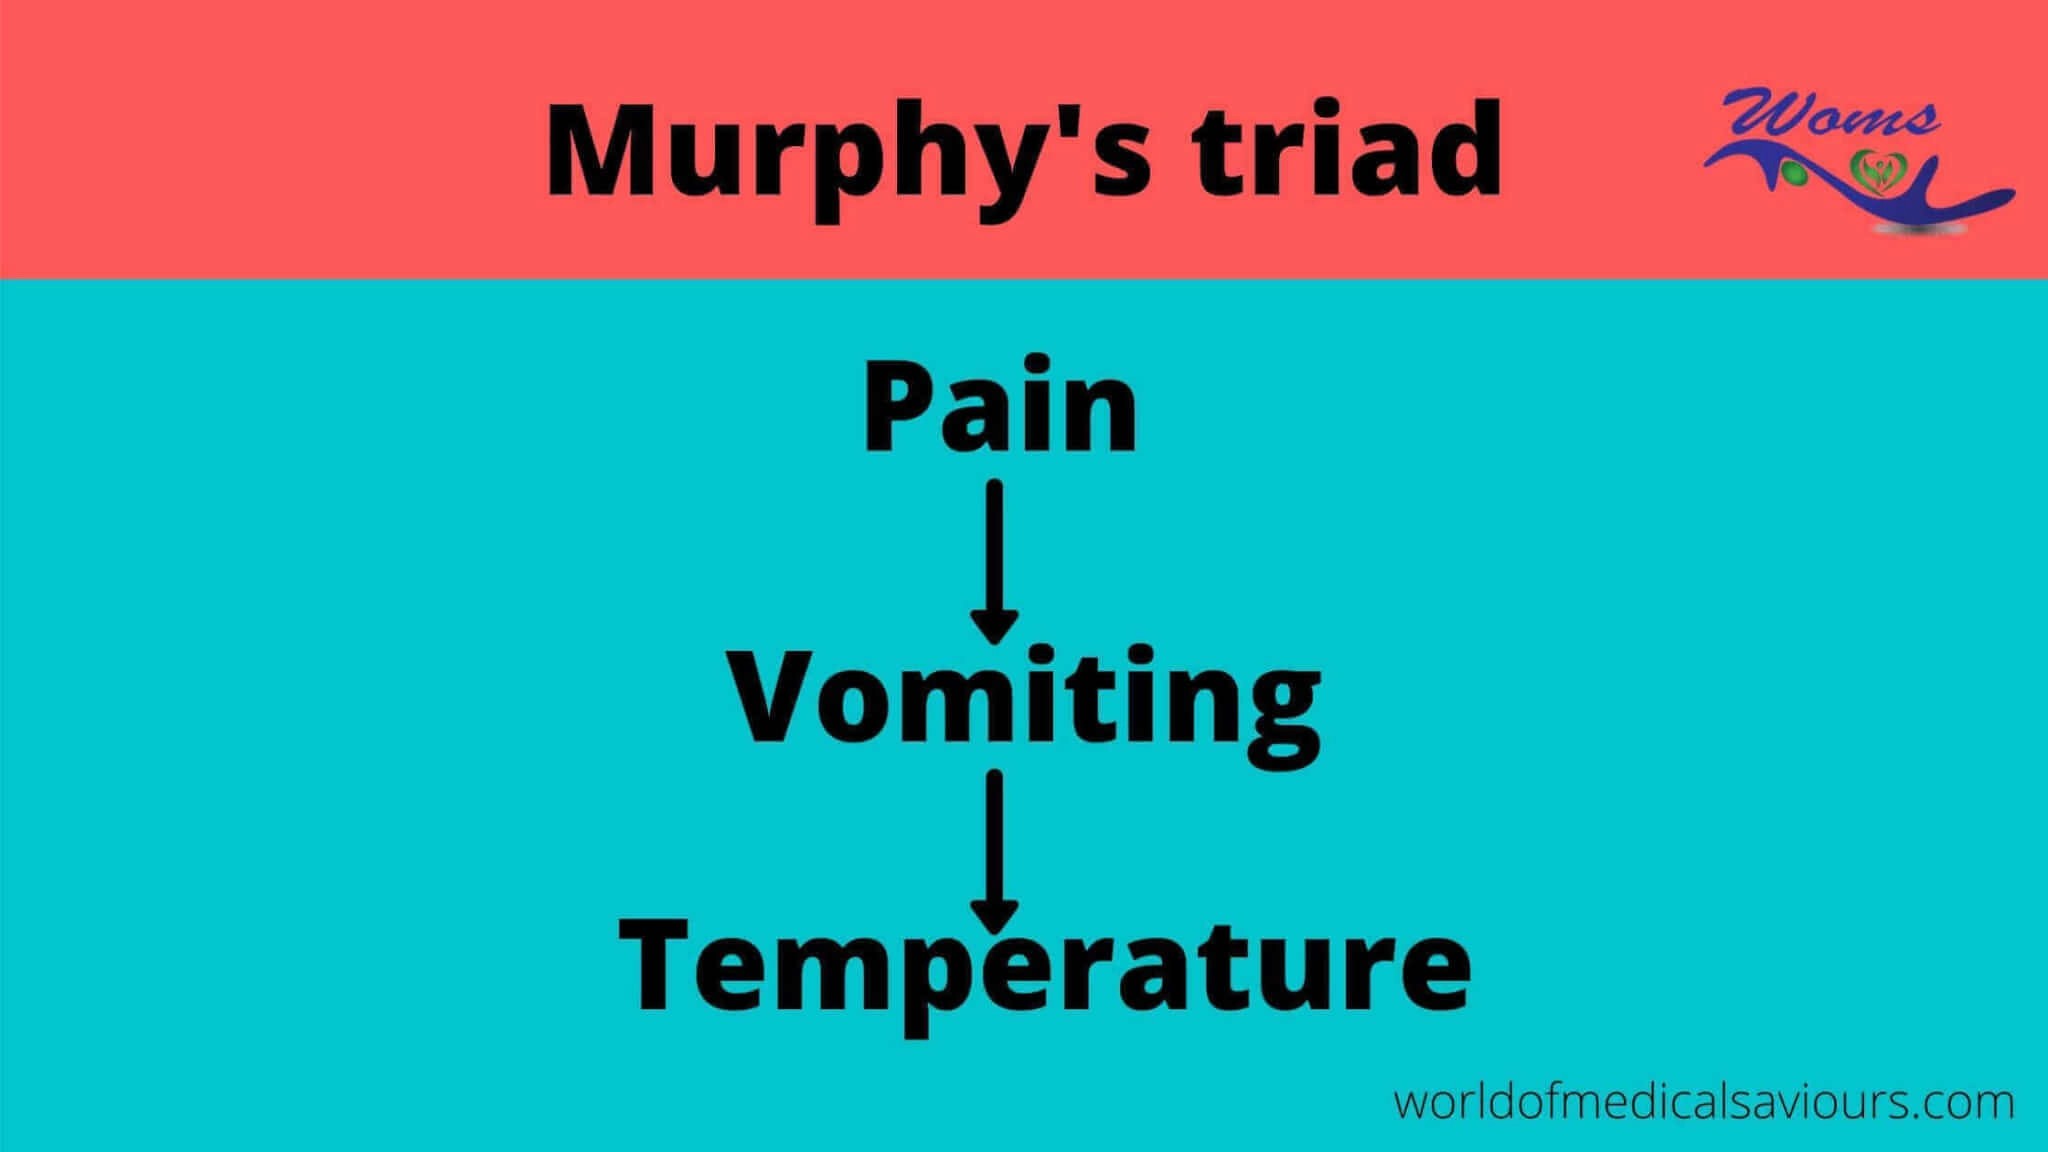 Murphy's triad